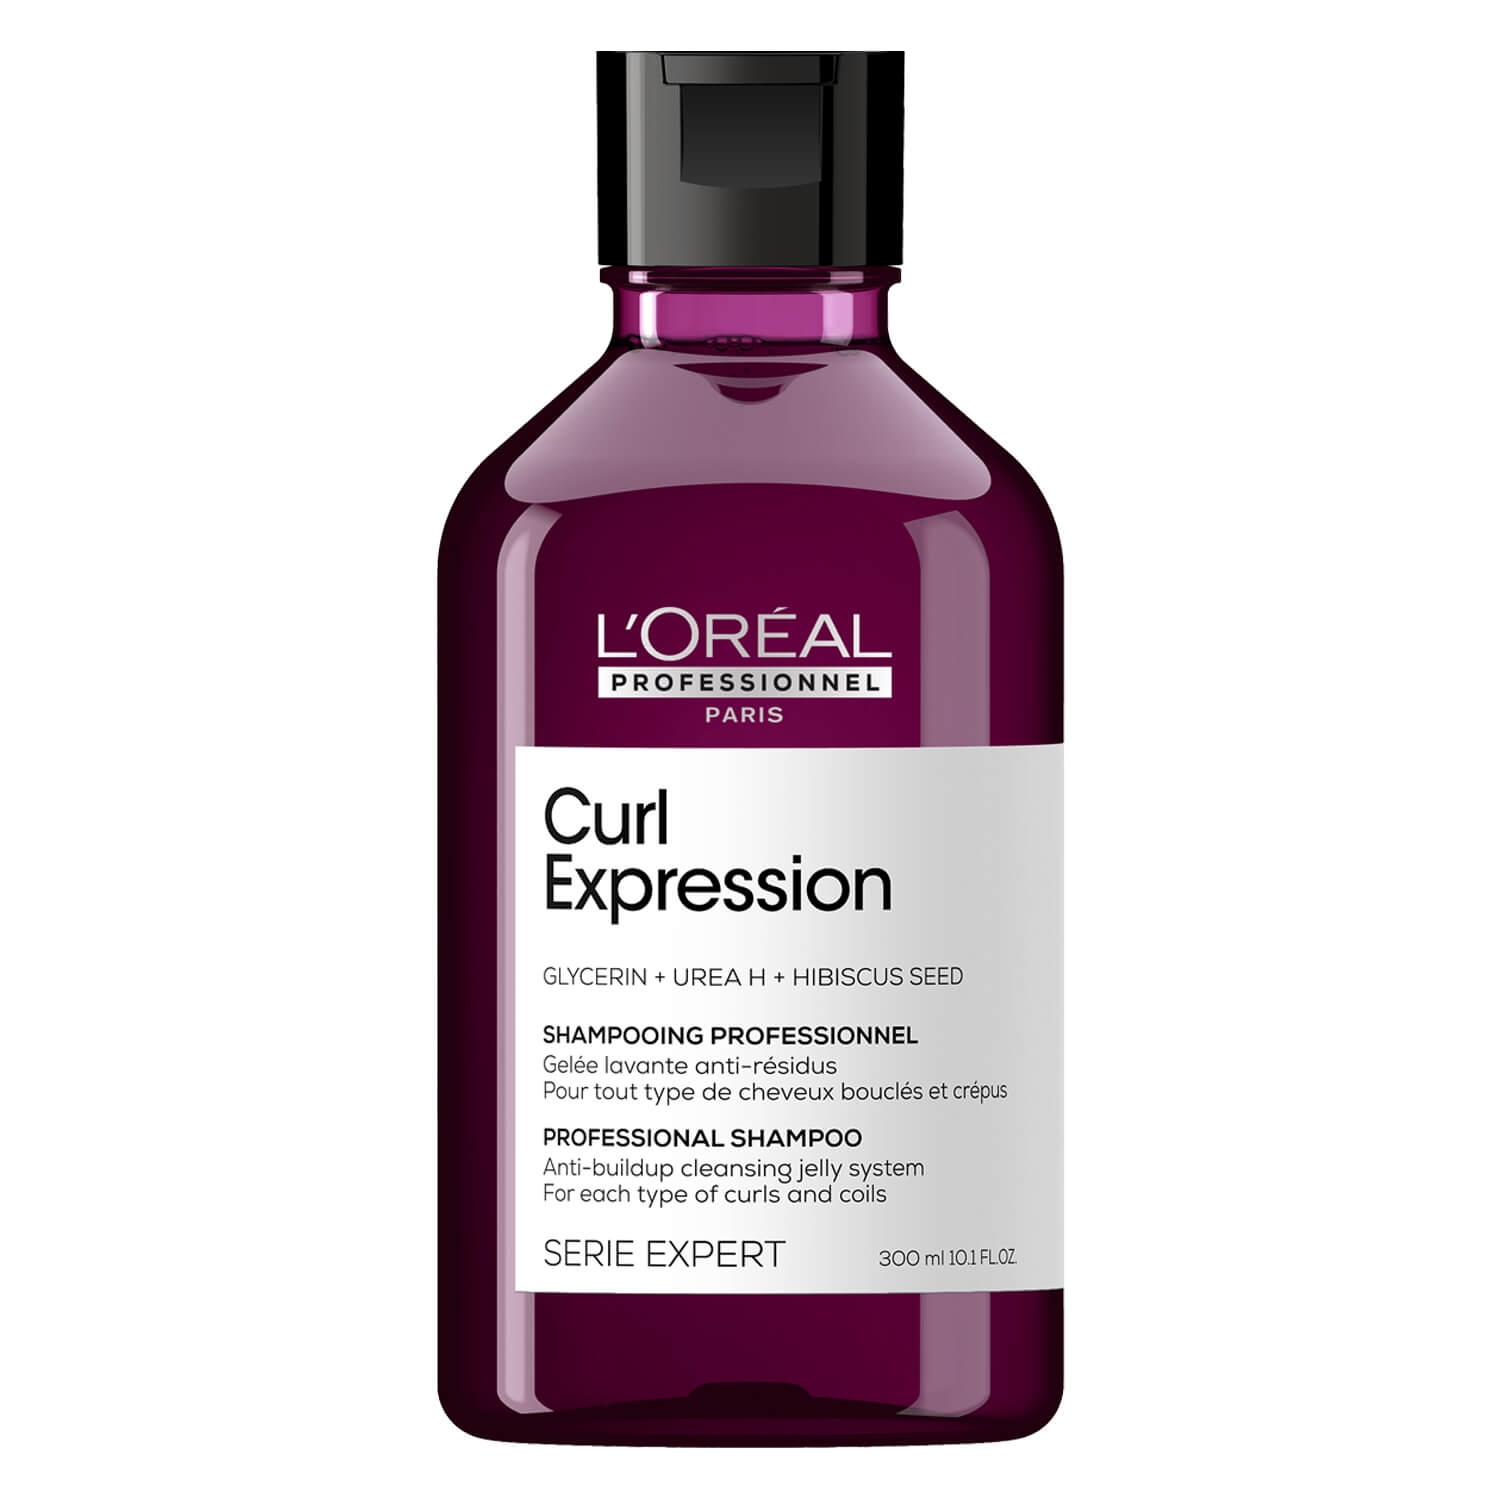 Produktbild von Série Expert Curl Expression - Anti-Buildup Cleansing Jelly